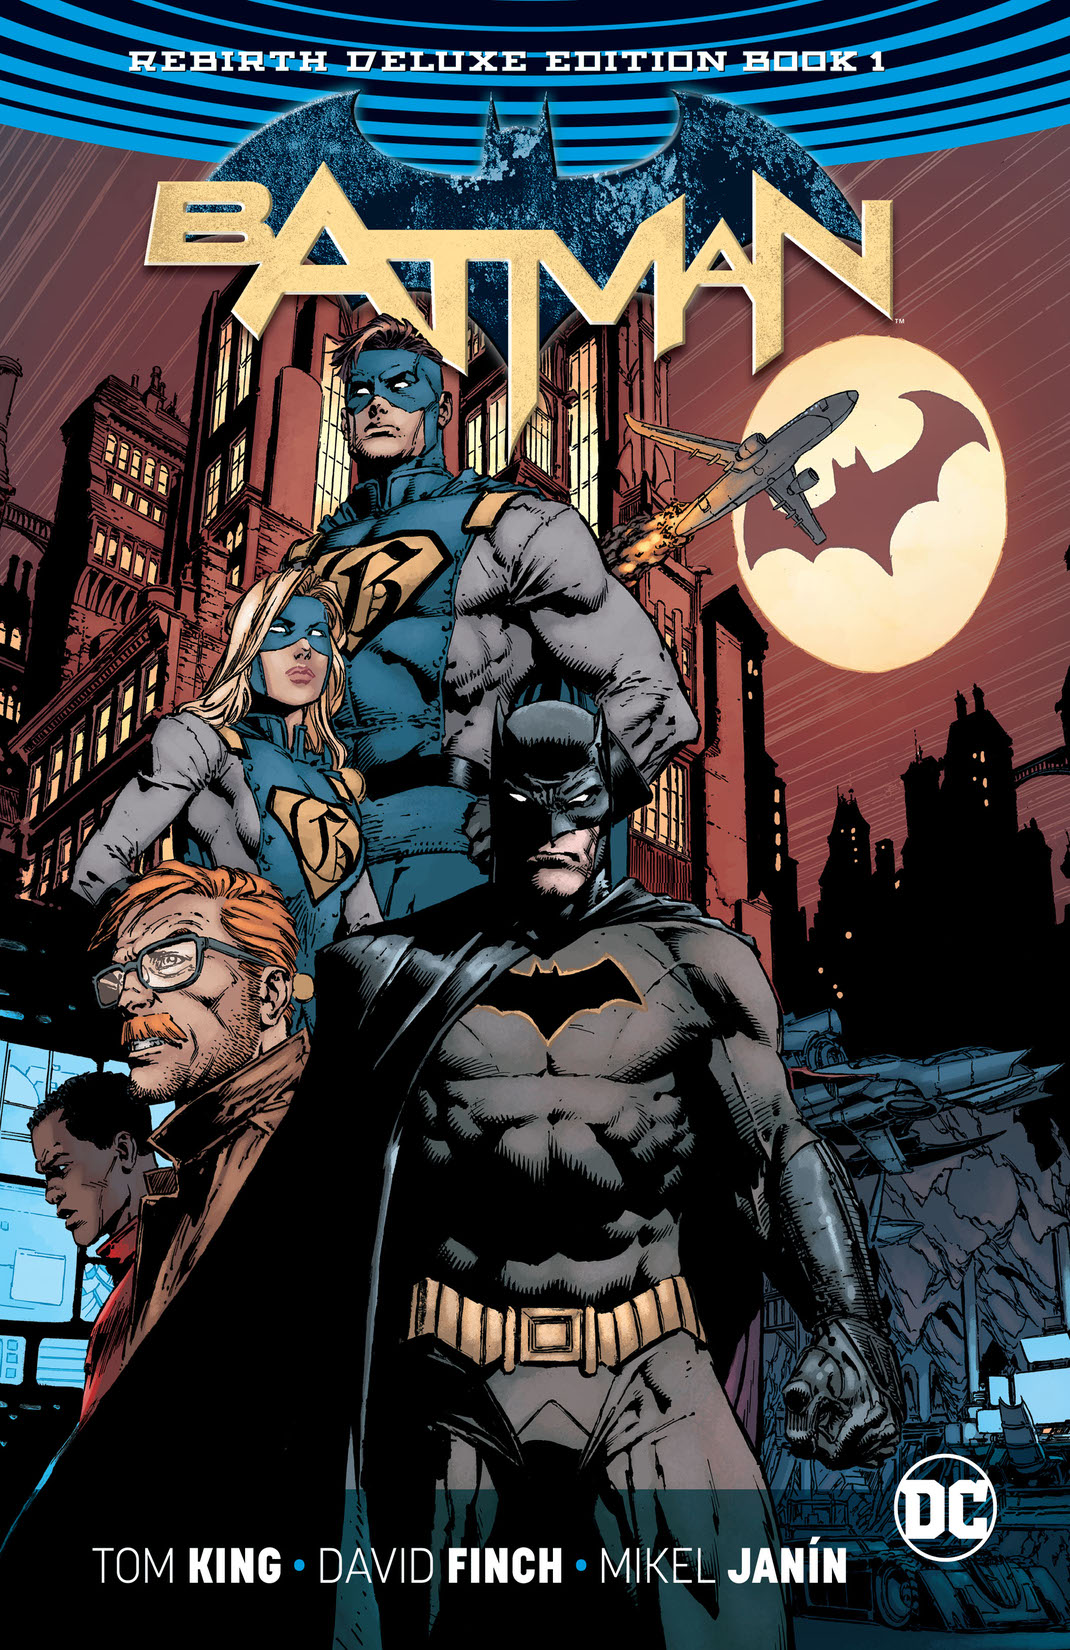 Batman: The Rebirth Deluxe Edition Book 1 (Rebirth) preview images